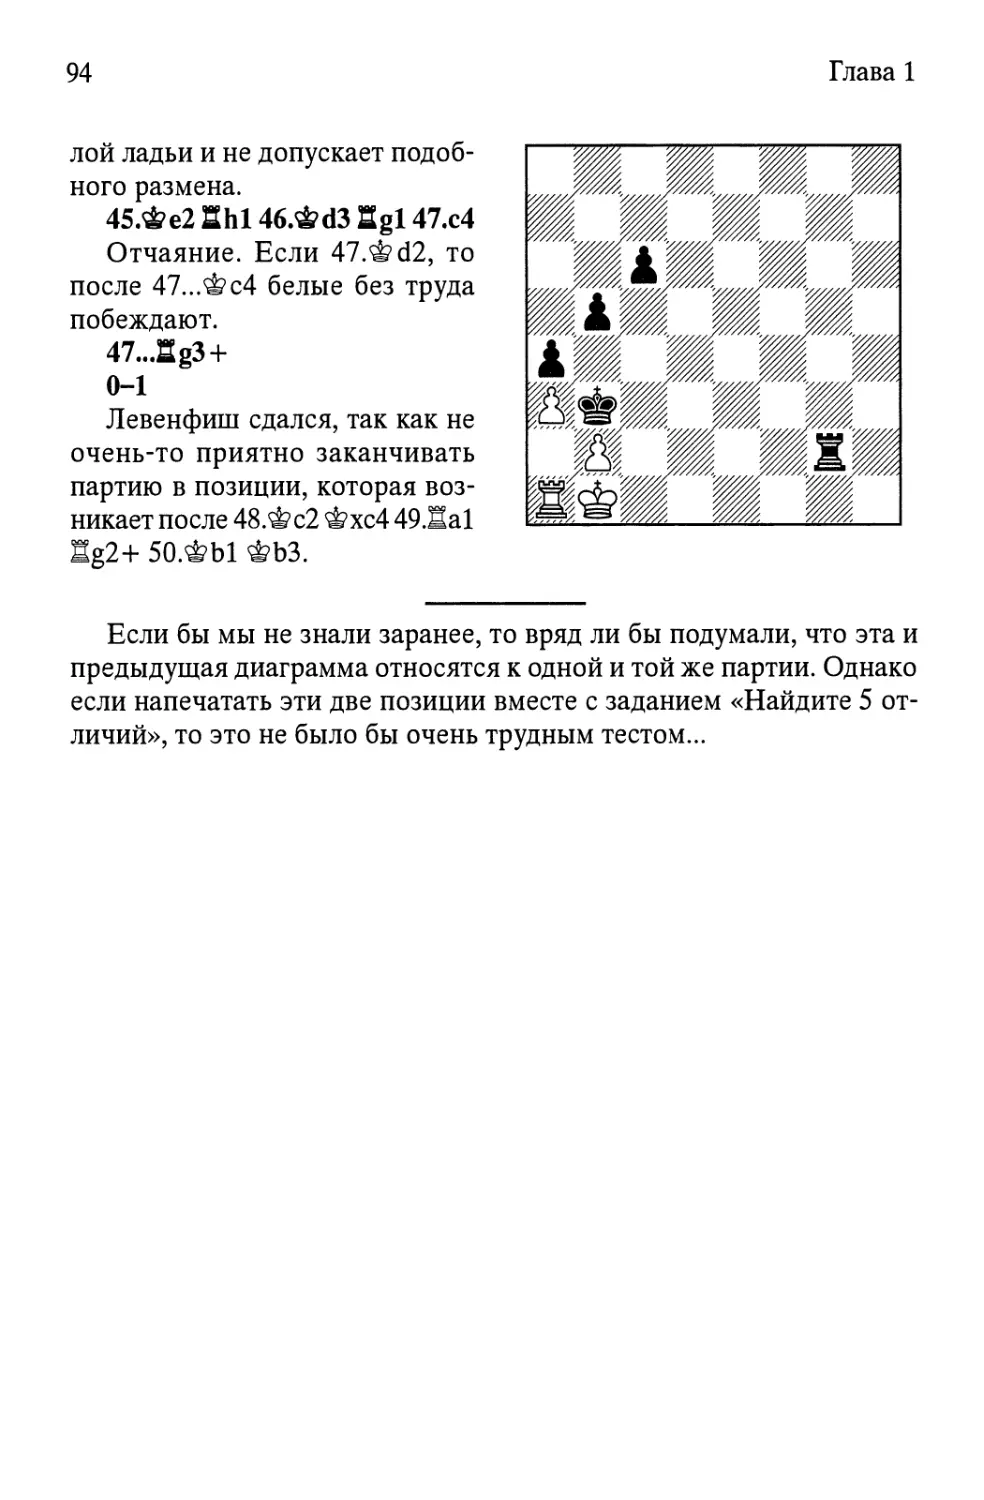 Глава 2. Александр Алехин и четвертая стадия шахматной партии